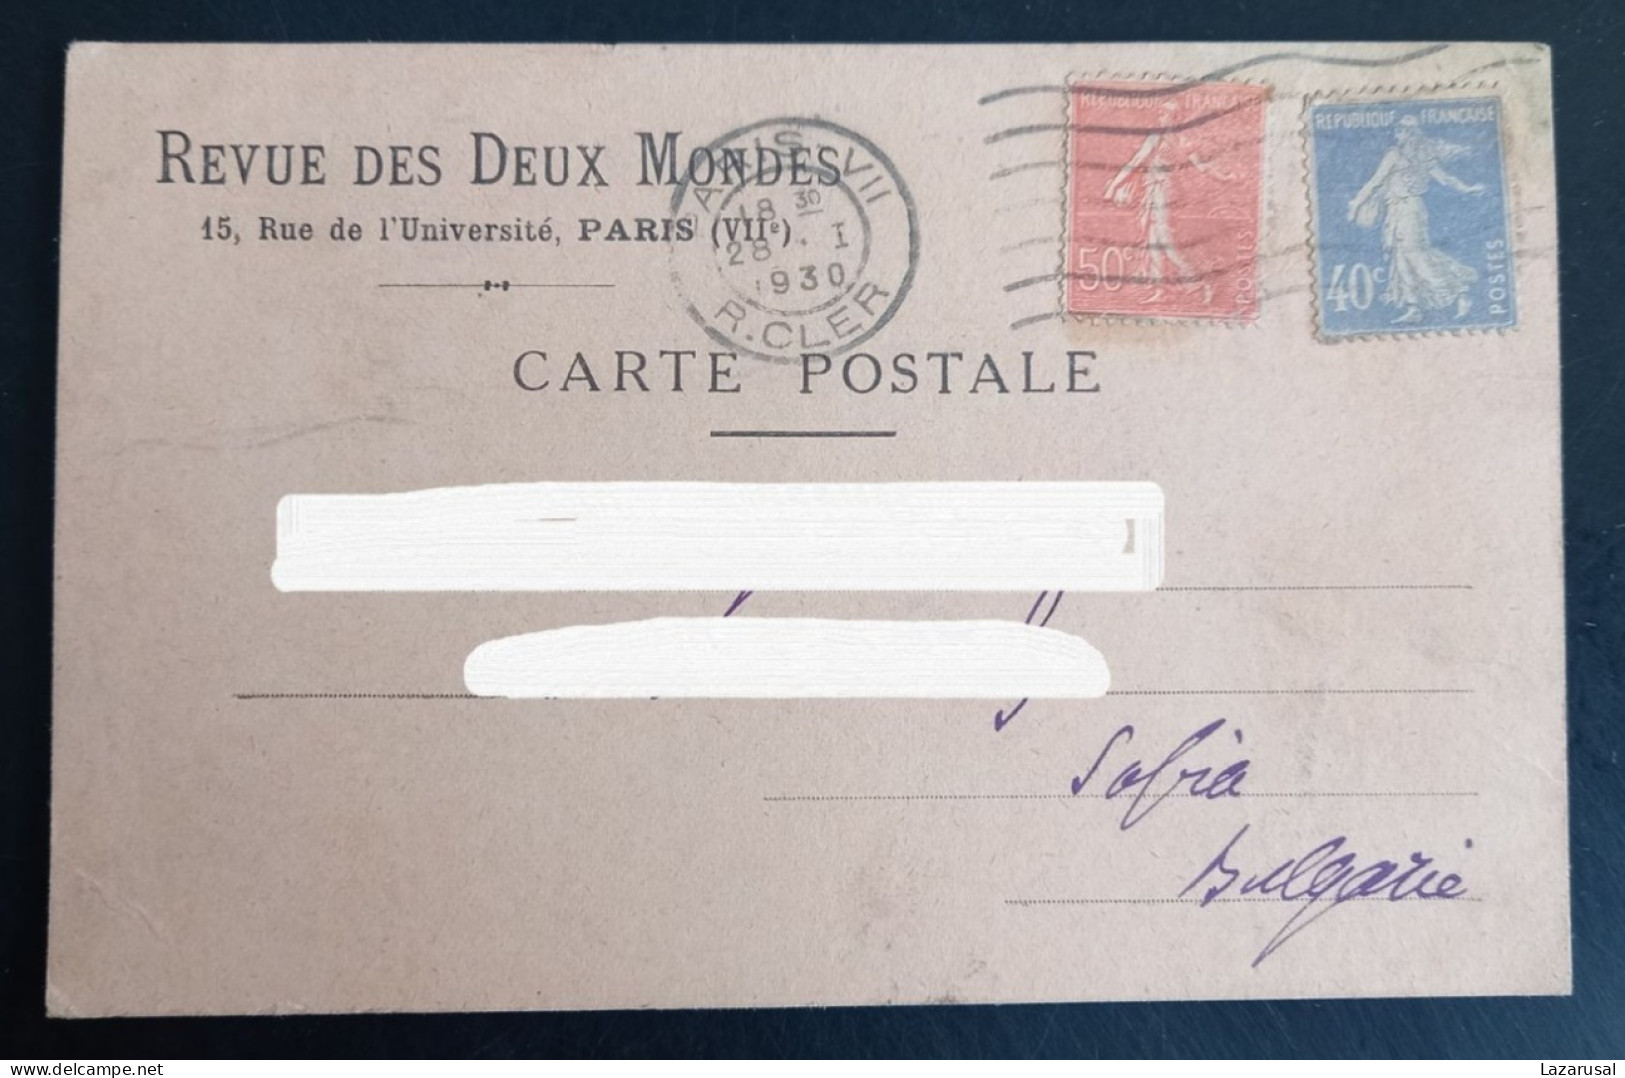 P1  France 1930 Postal Stationery Card Revue Des Deux Mondes Sent To Bulgaria Sofia - Standard Postcards & Stamped On Demand (before 1995)